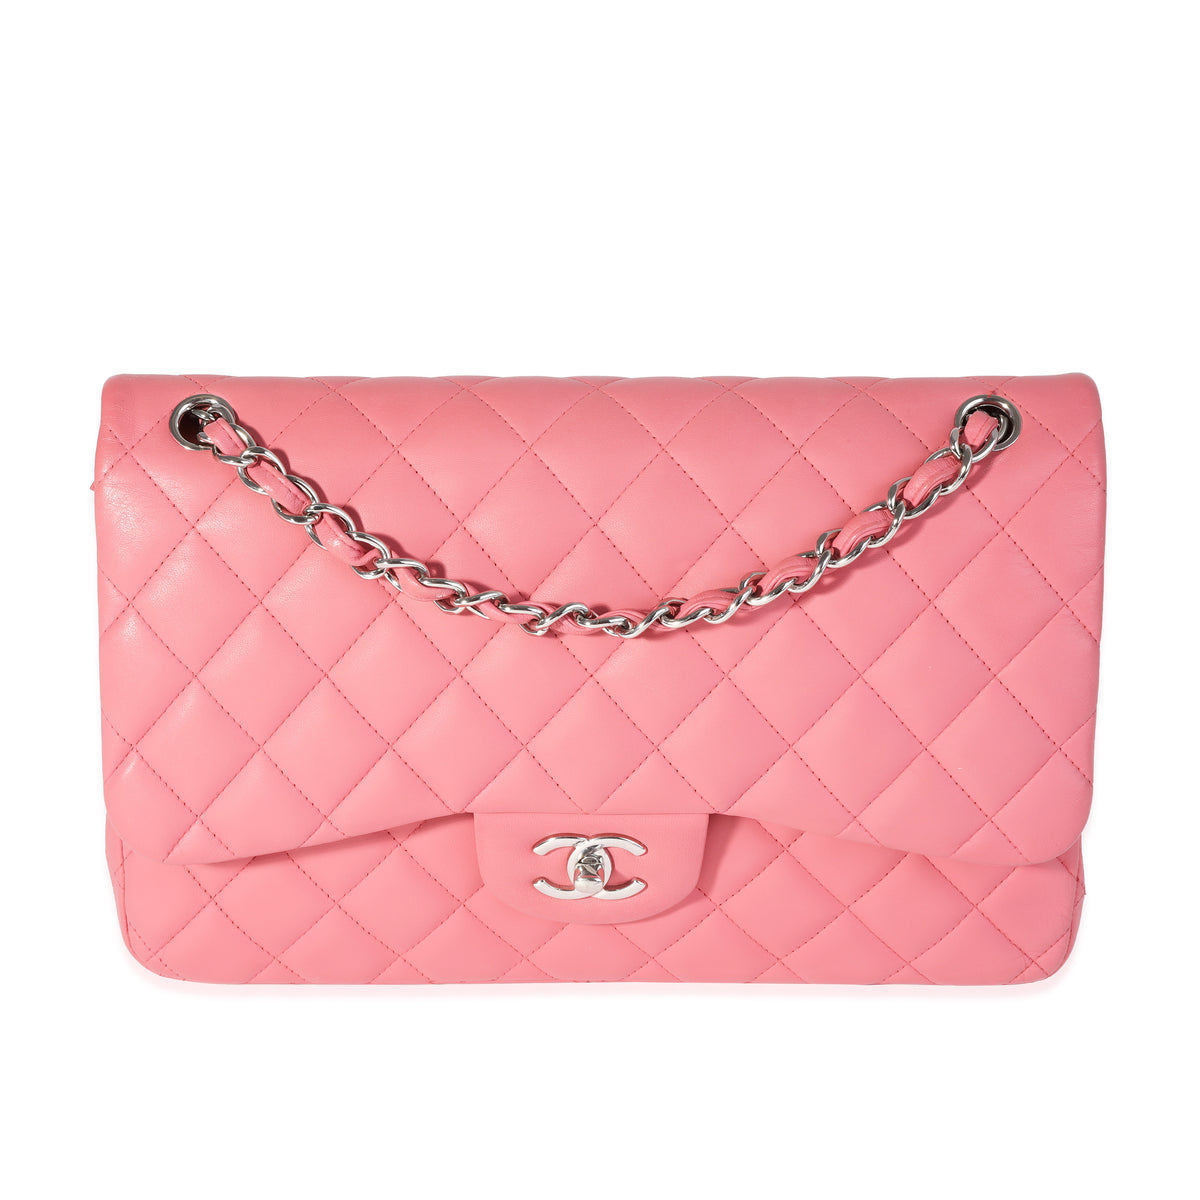 light pink chanel flap bag